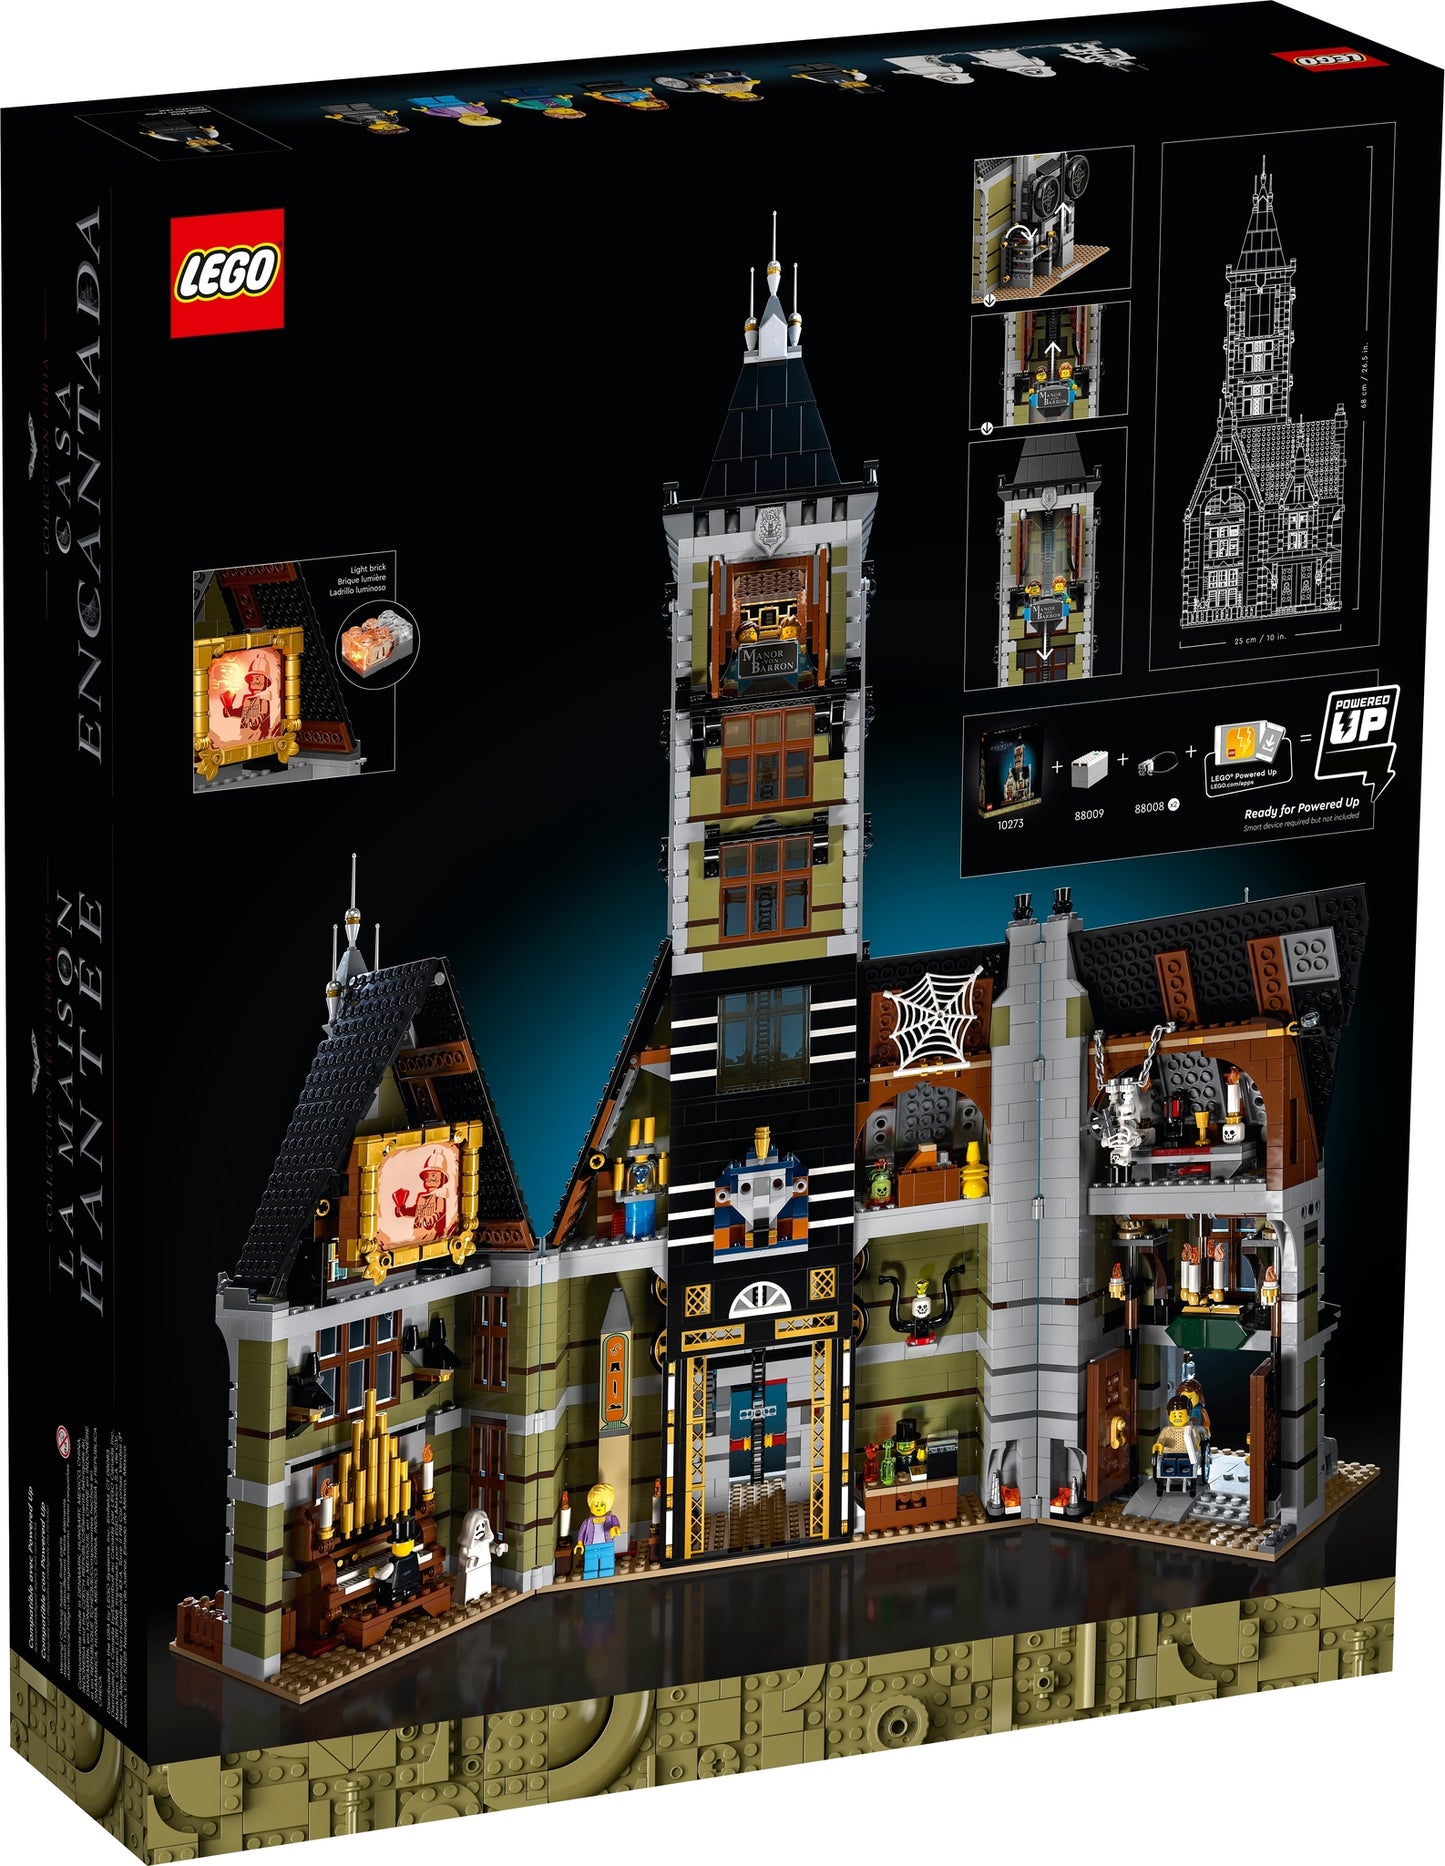 10273 LEGO Creator - La Casa Stregata